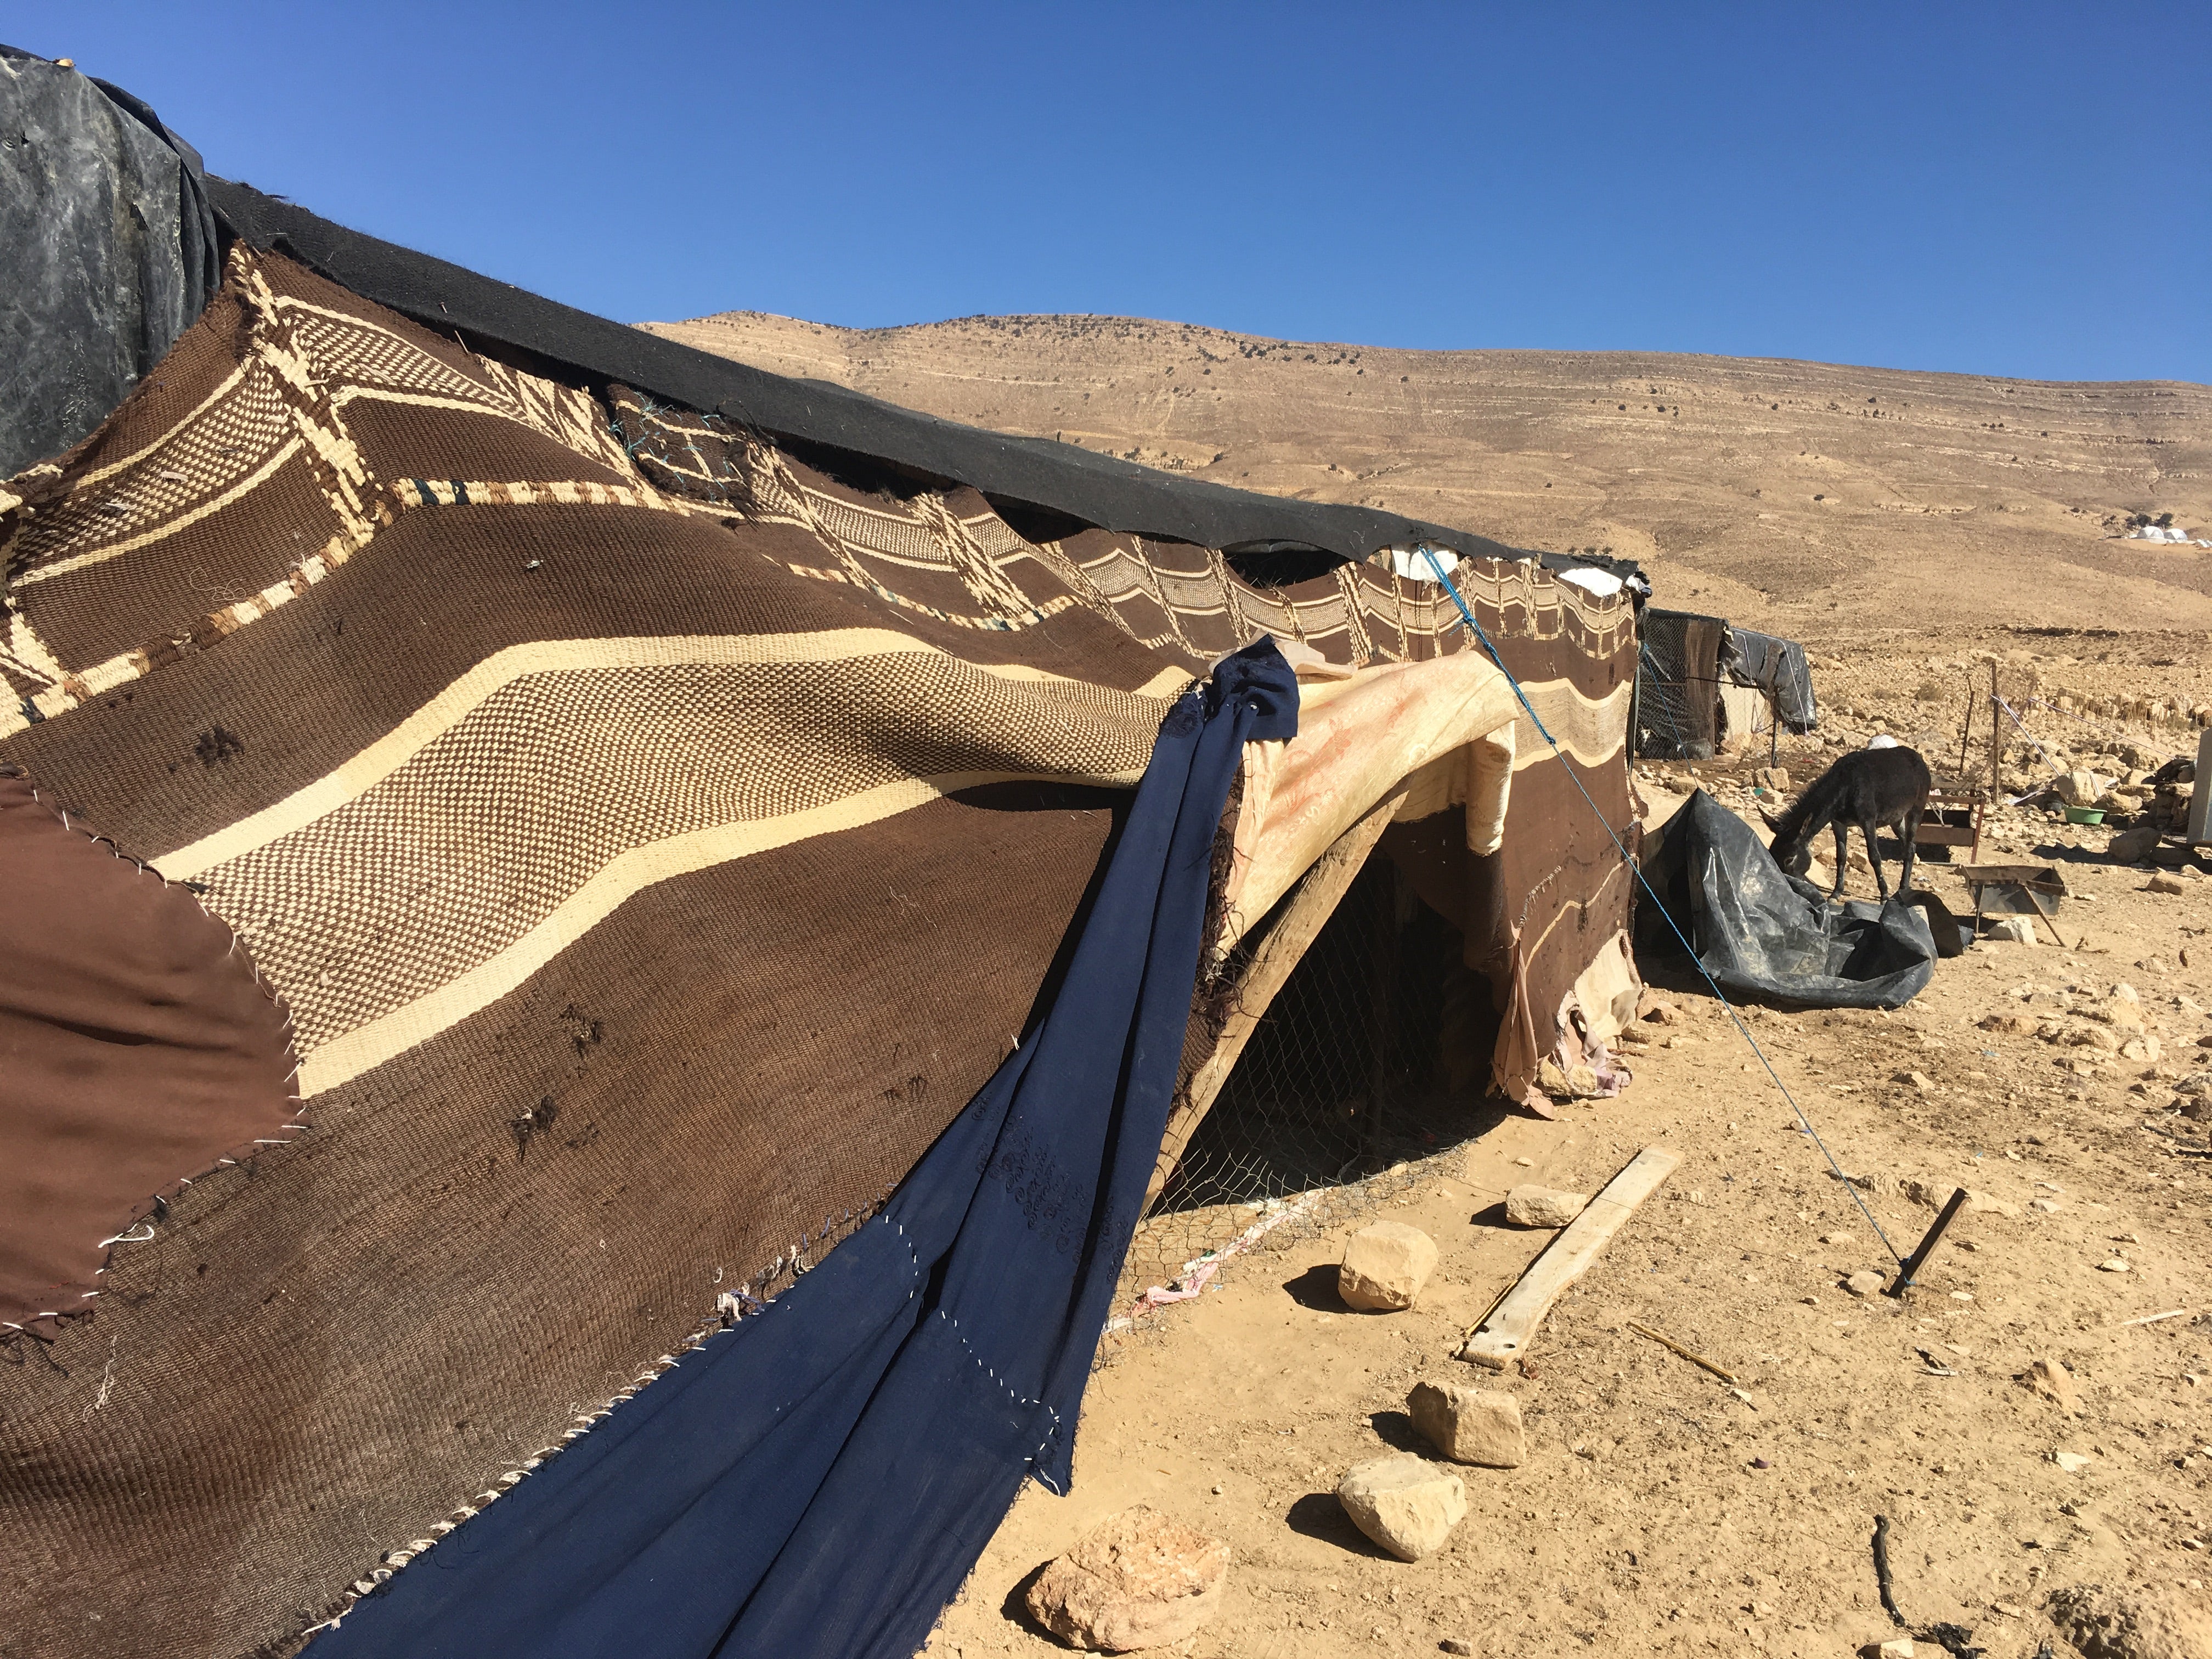 Under the Bedouin Tent Pillow